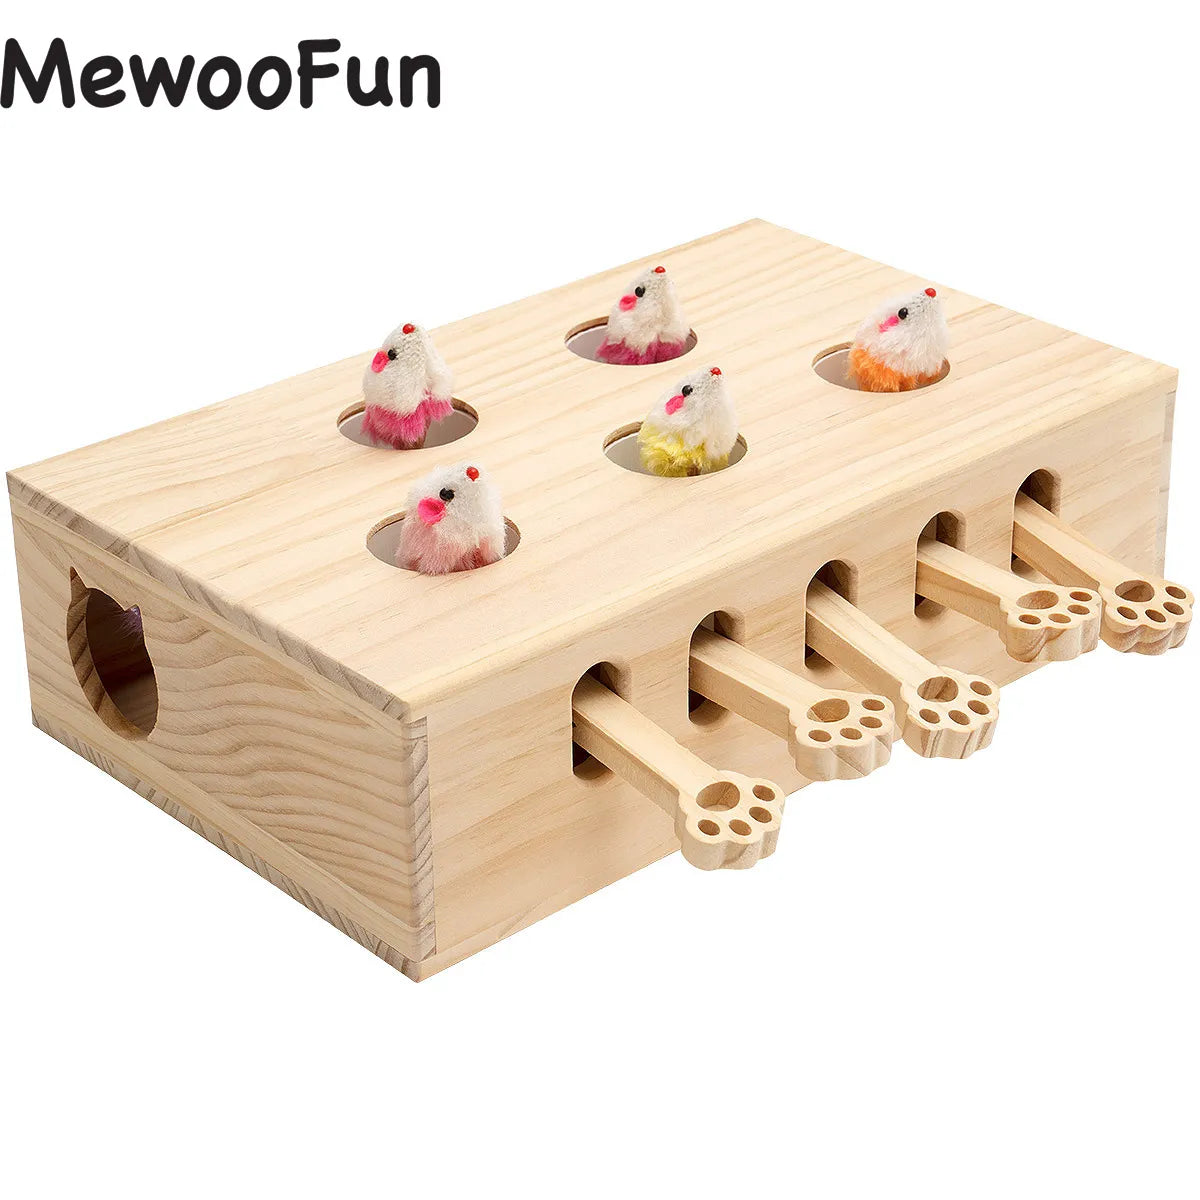 Interactive Whack-a-Mole Cat Toy: MewooFun WG320